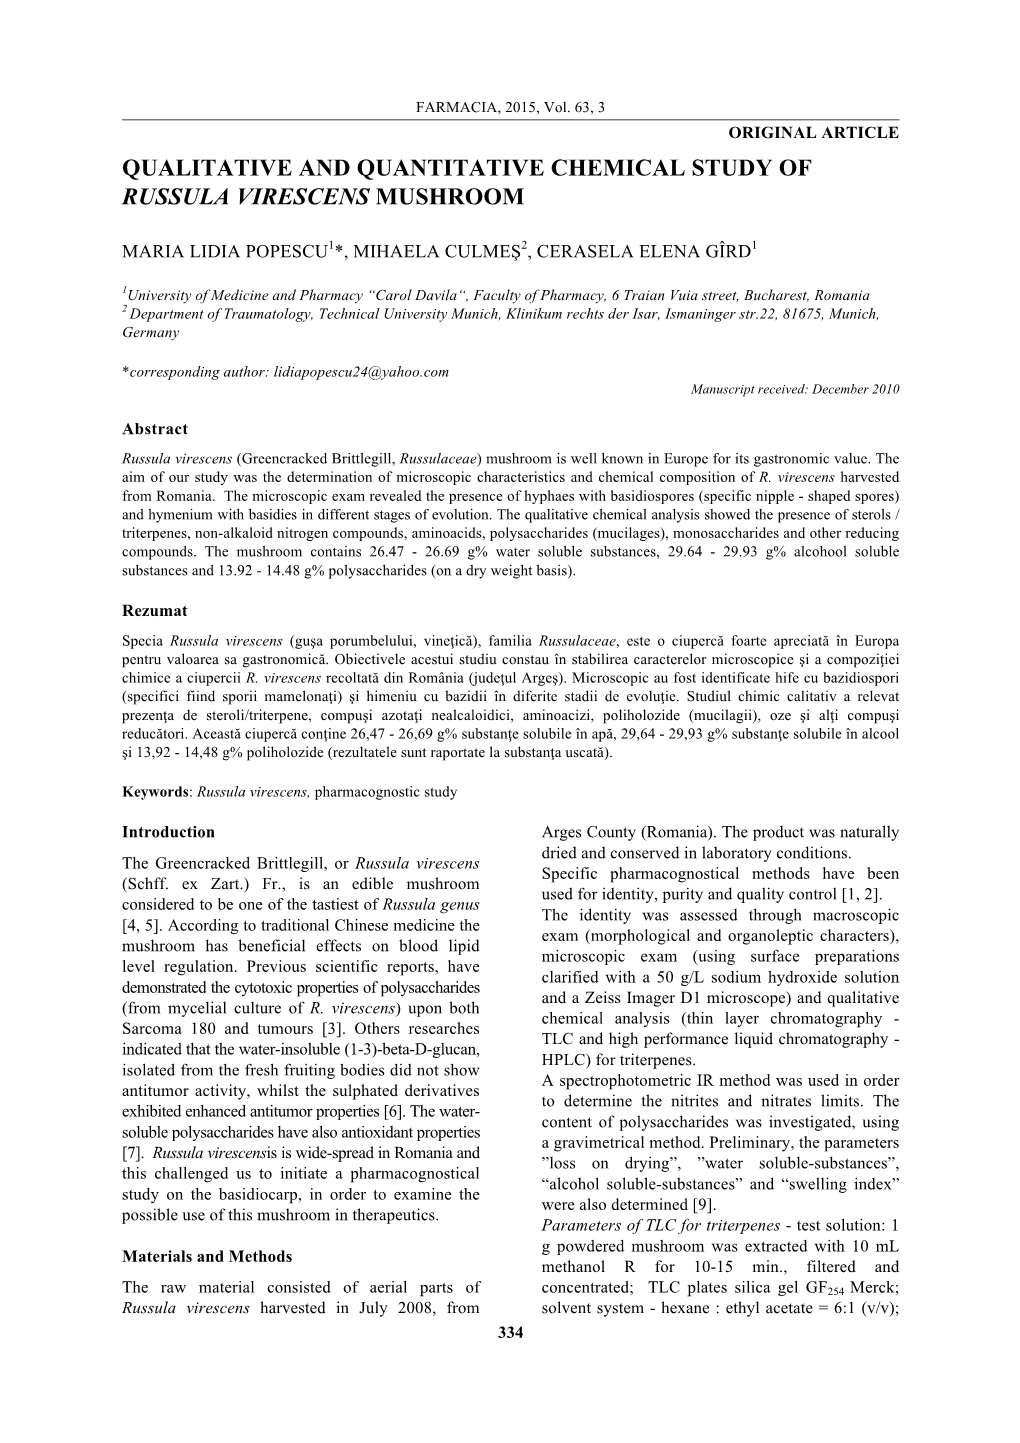 Qualitative and Quantitative Chemical Study of Russula Virescens Mushroom